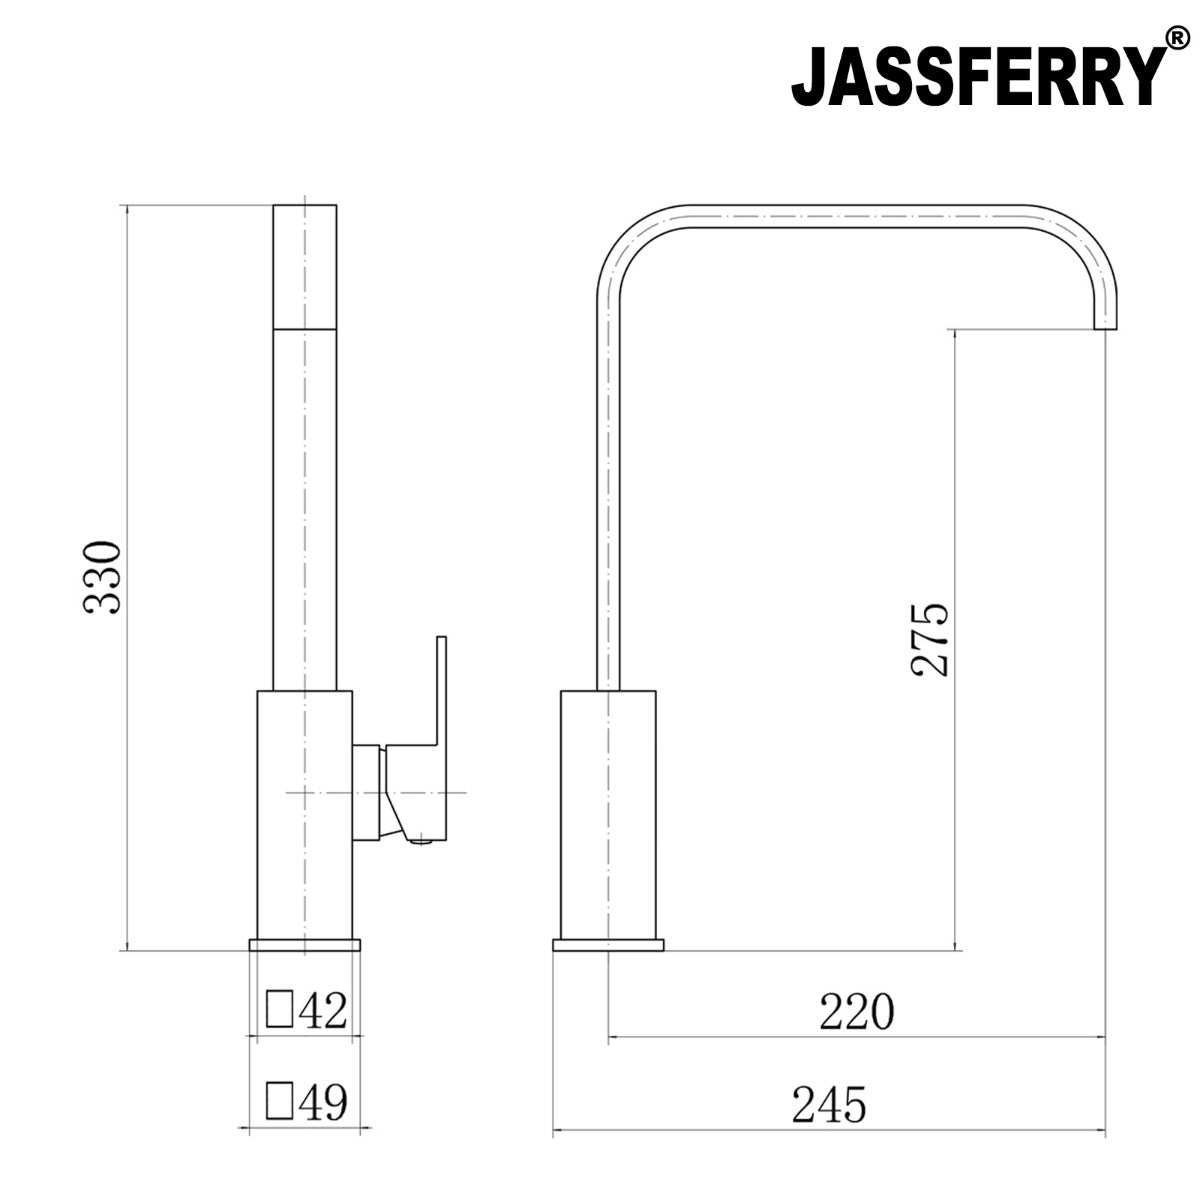 JassferryJASSFERRY Kitchen Mixer Taps Cuboid Monobloc Single Lever Chrome Swivel SpoutKitchen taps